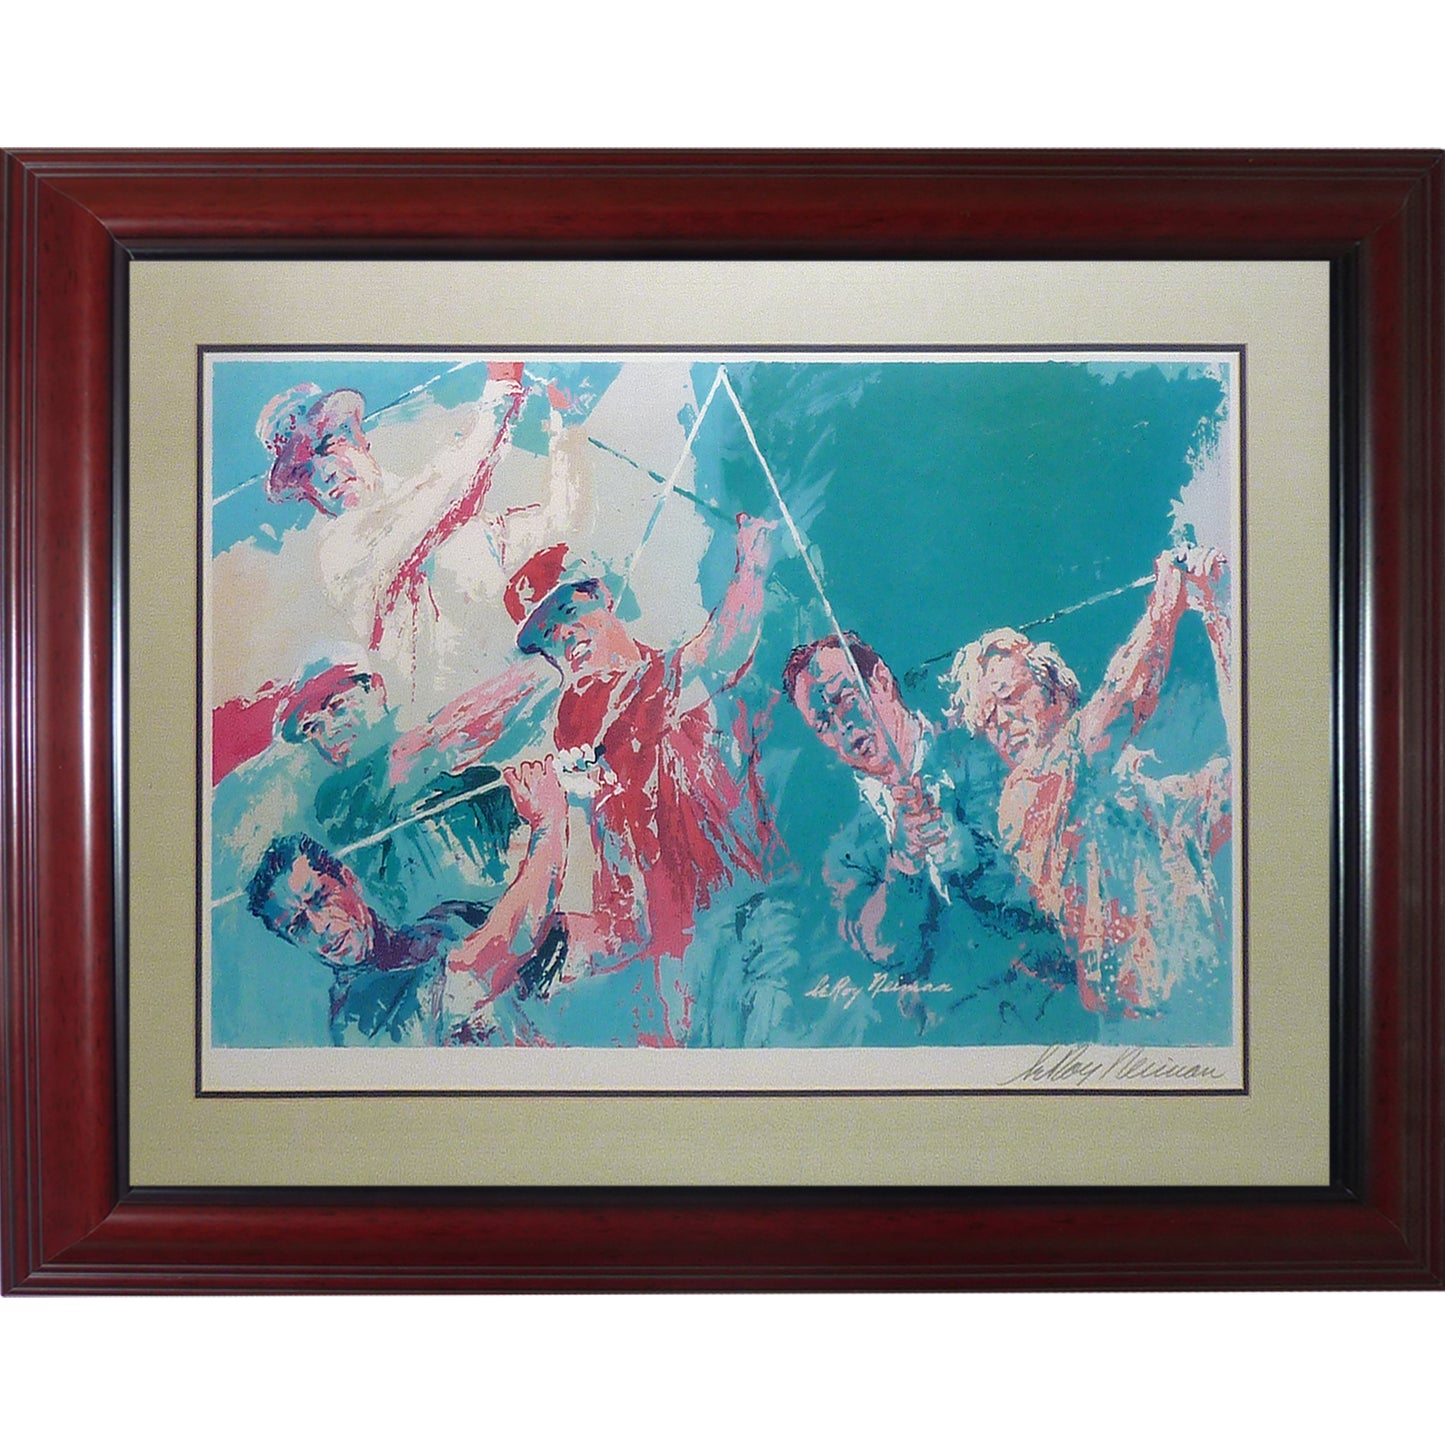 LeRoy Neiman Autographed "Legends of Golf" Deluxe Framed Artwork Print